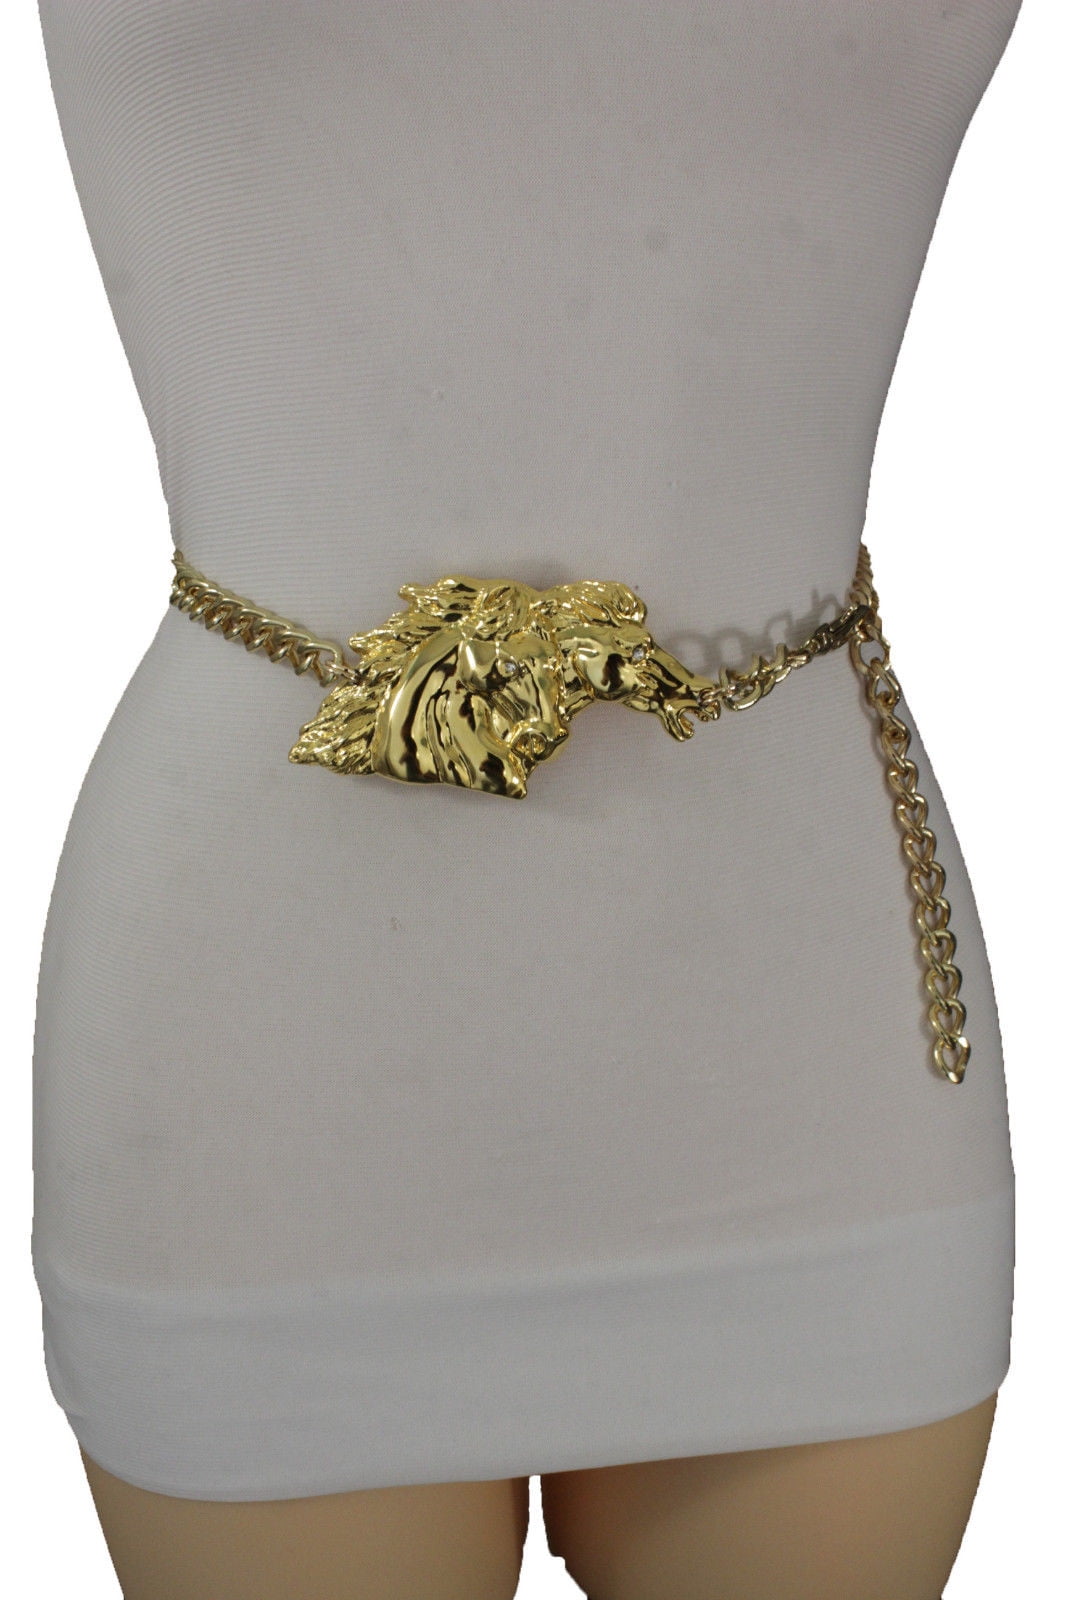 TFJ Women Fashion Belt Hip High Waist Gold Metal Chain Medusa Head Buckle XS S M